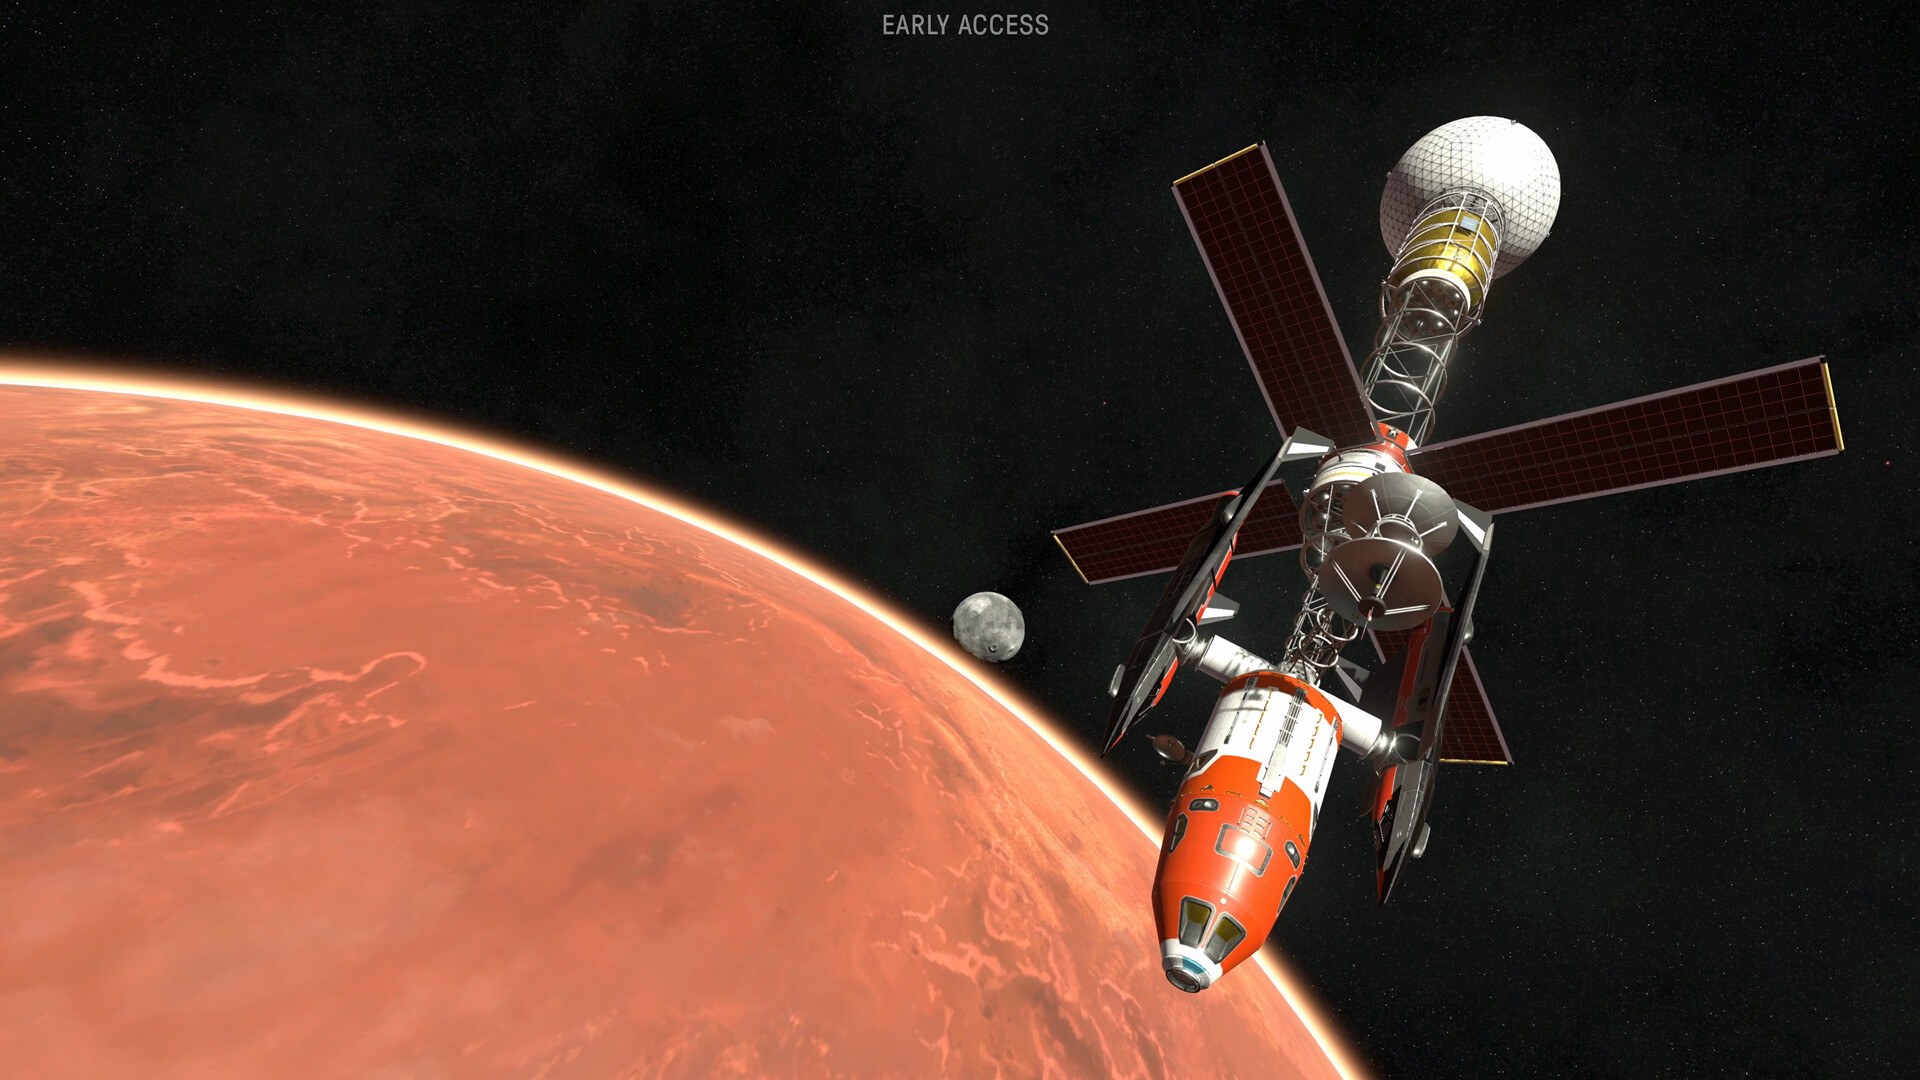 Kerbal Space Program 2 - Early Access (Steam)